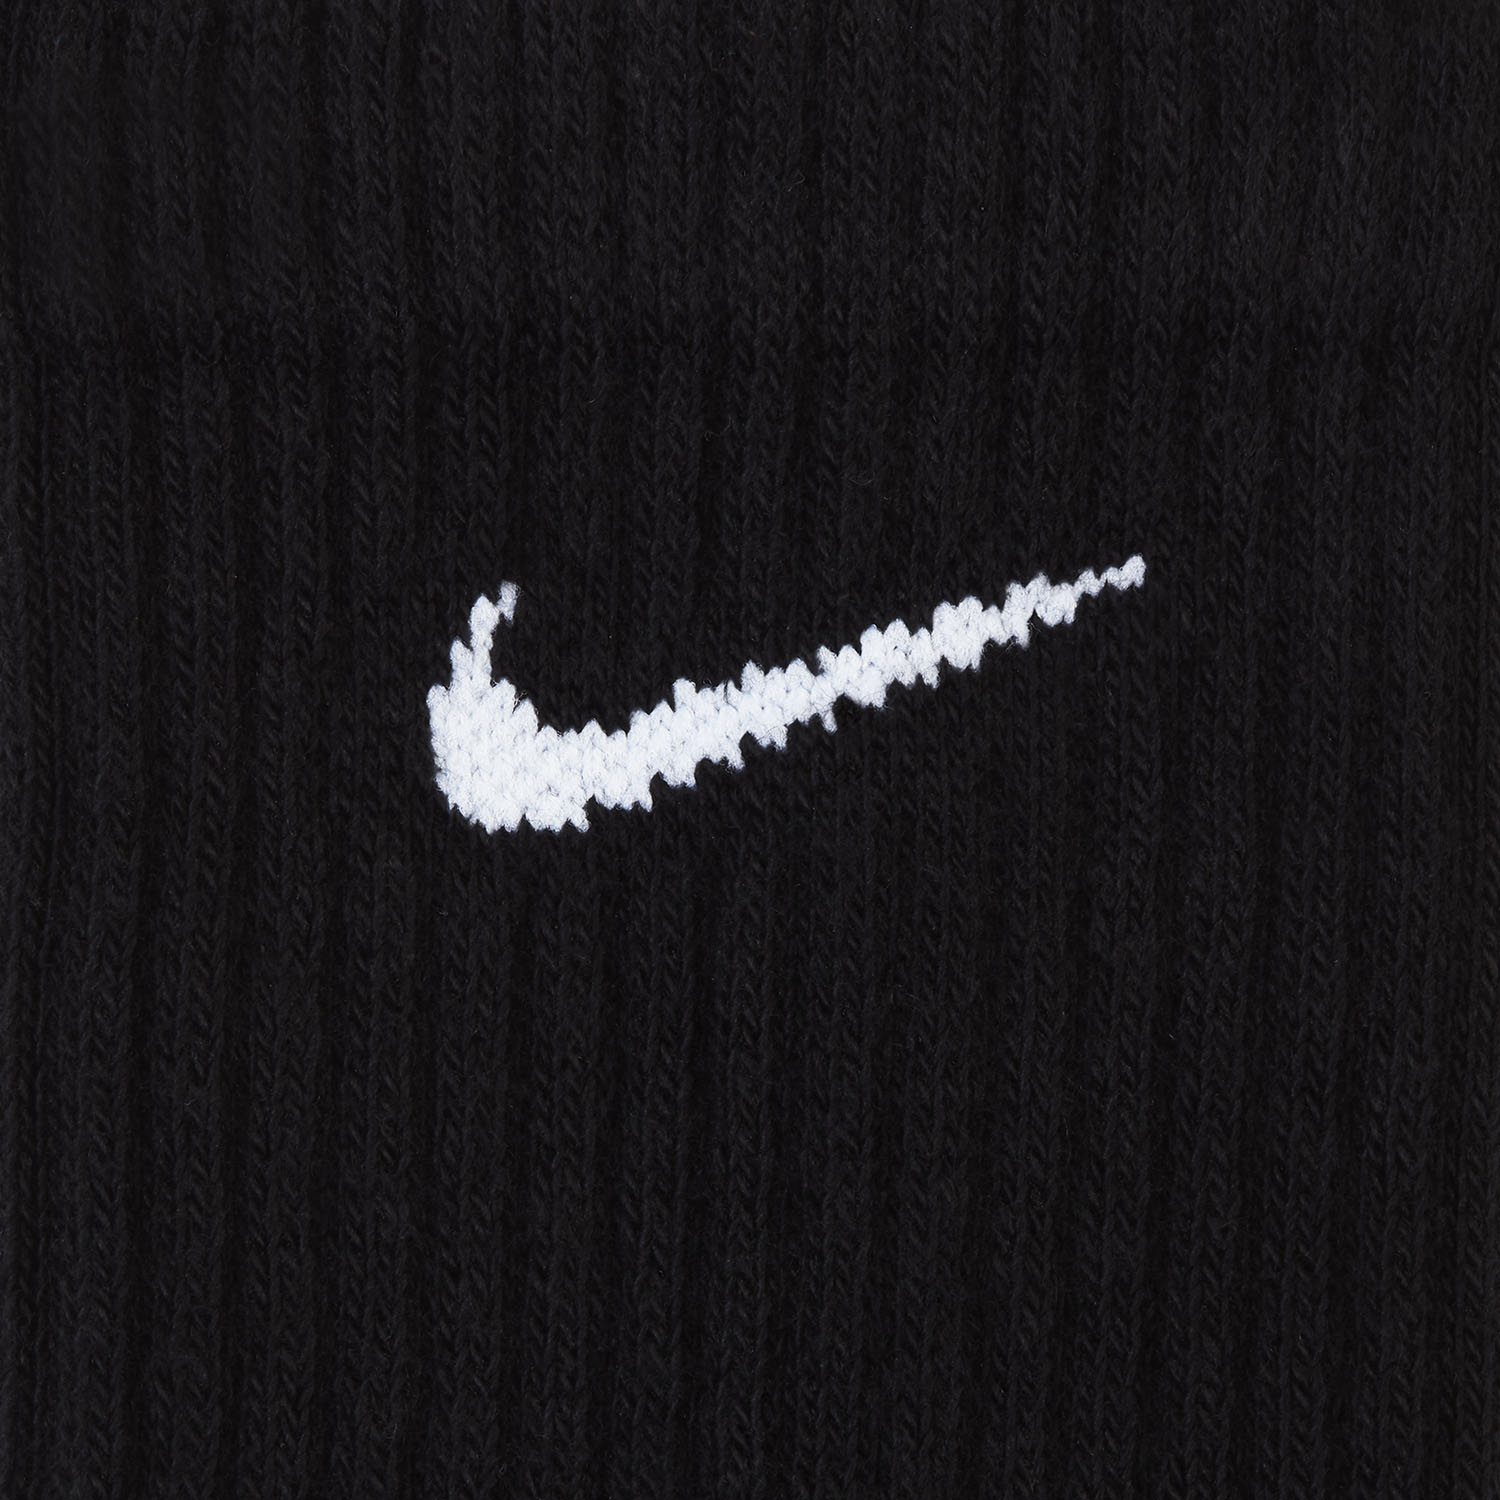 Nike Everyday Cushioned Crew Socks - Runnerspoint Kenya